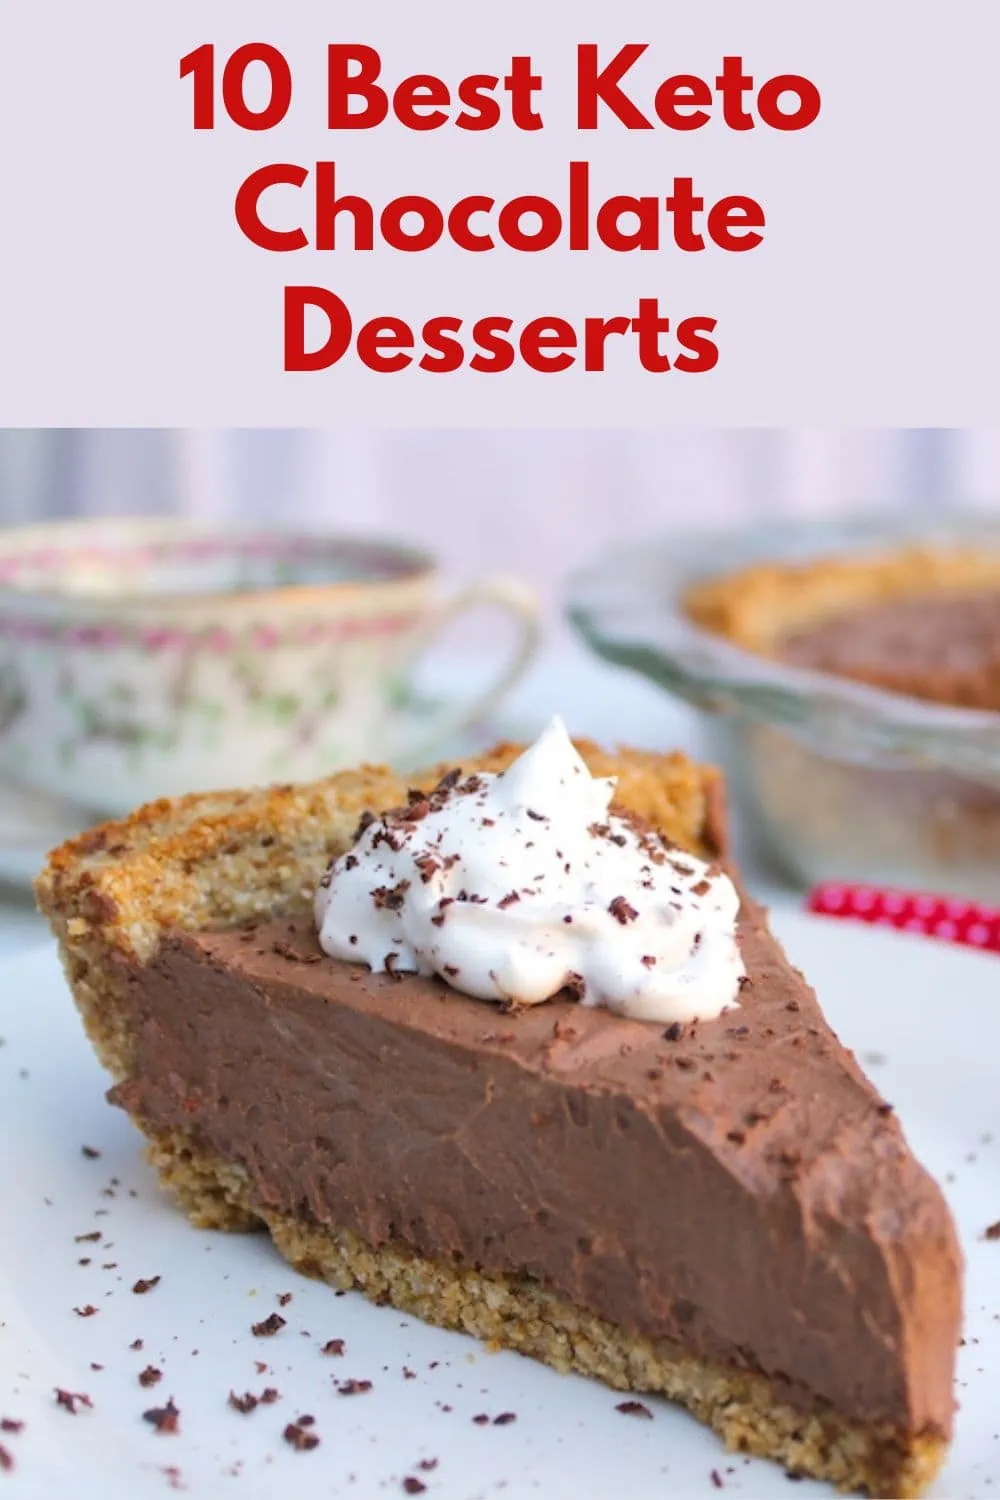 10 Best Keto Chocolate Desserts